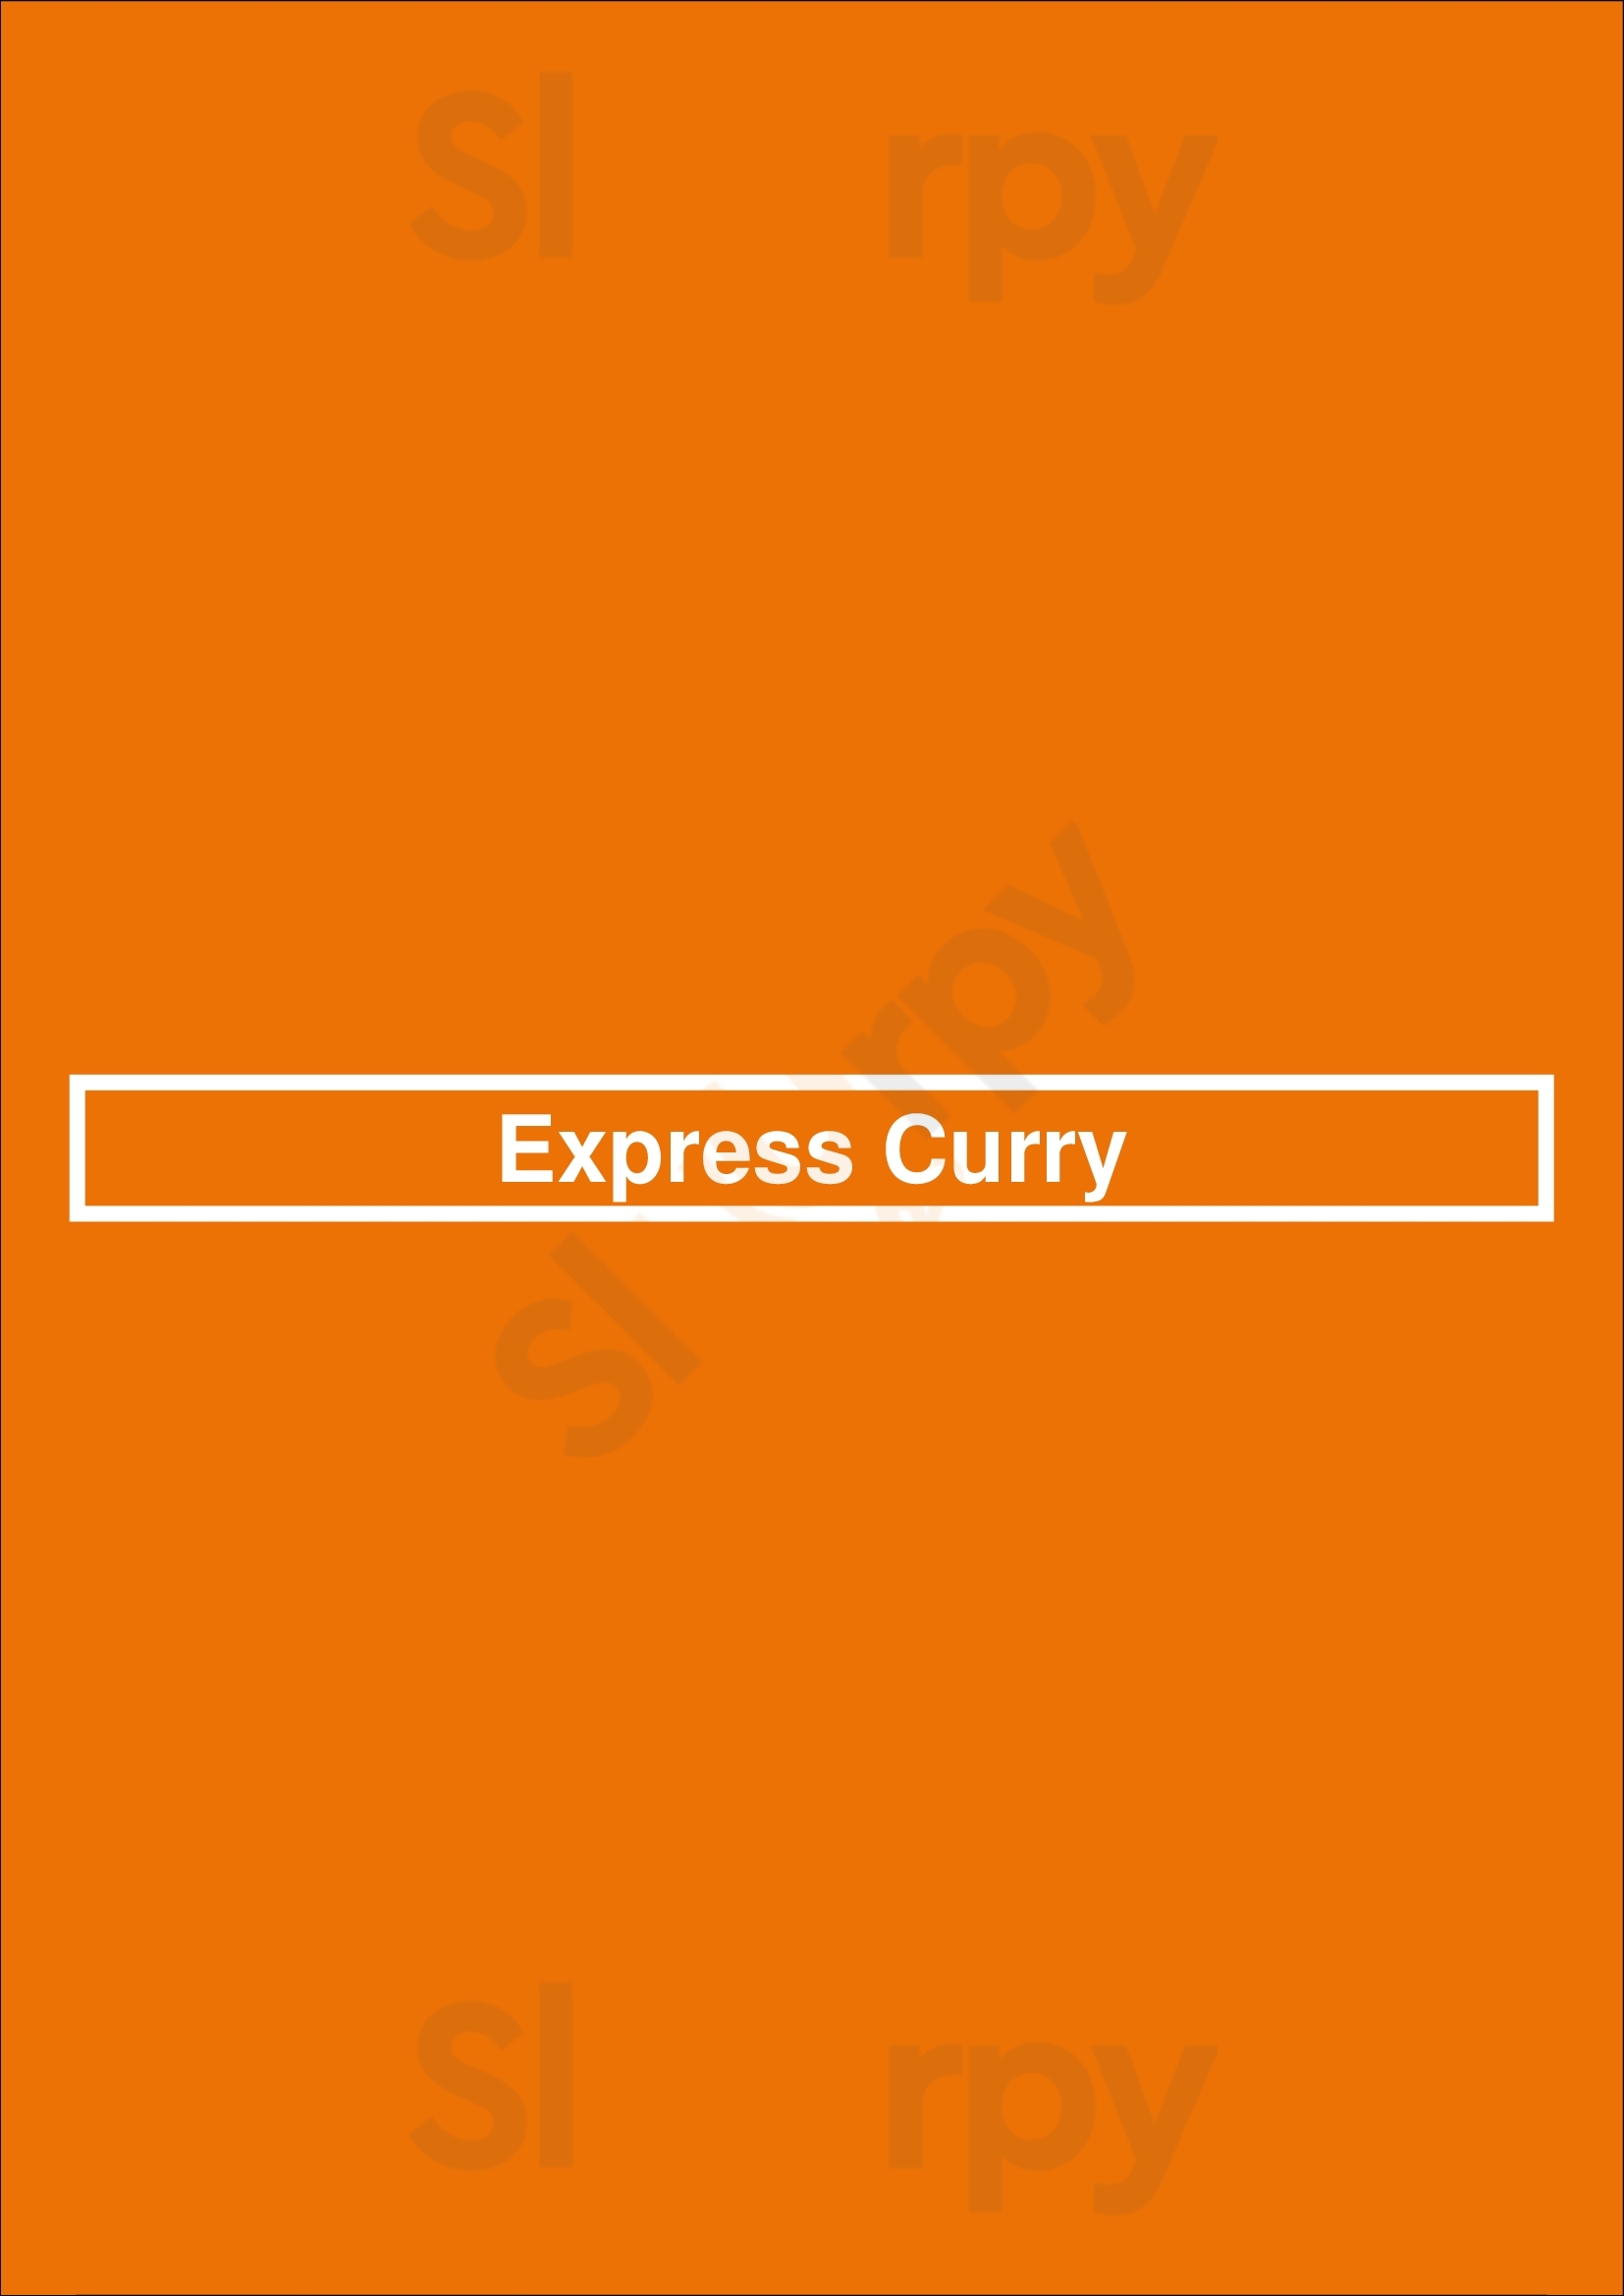 Express Curry Stoney Creek Menu - 1